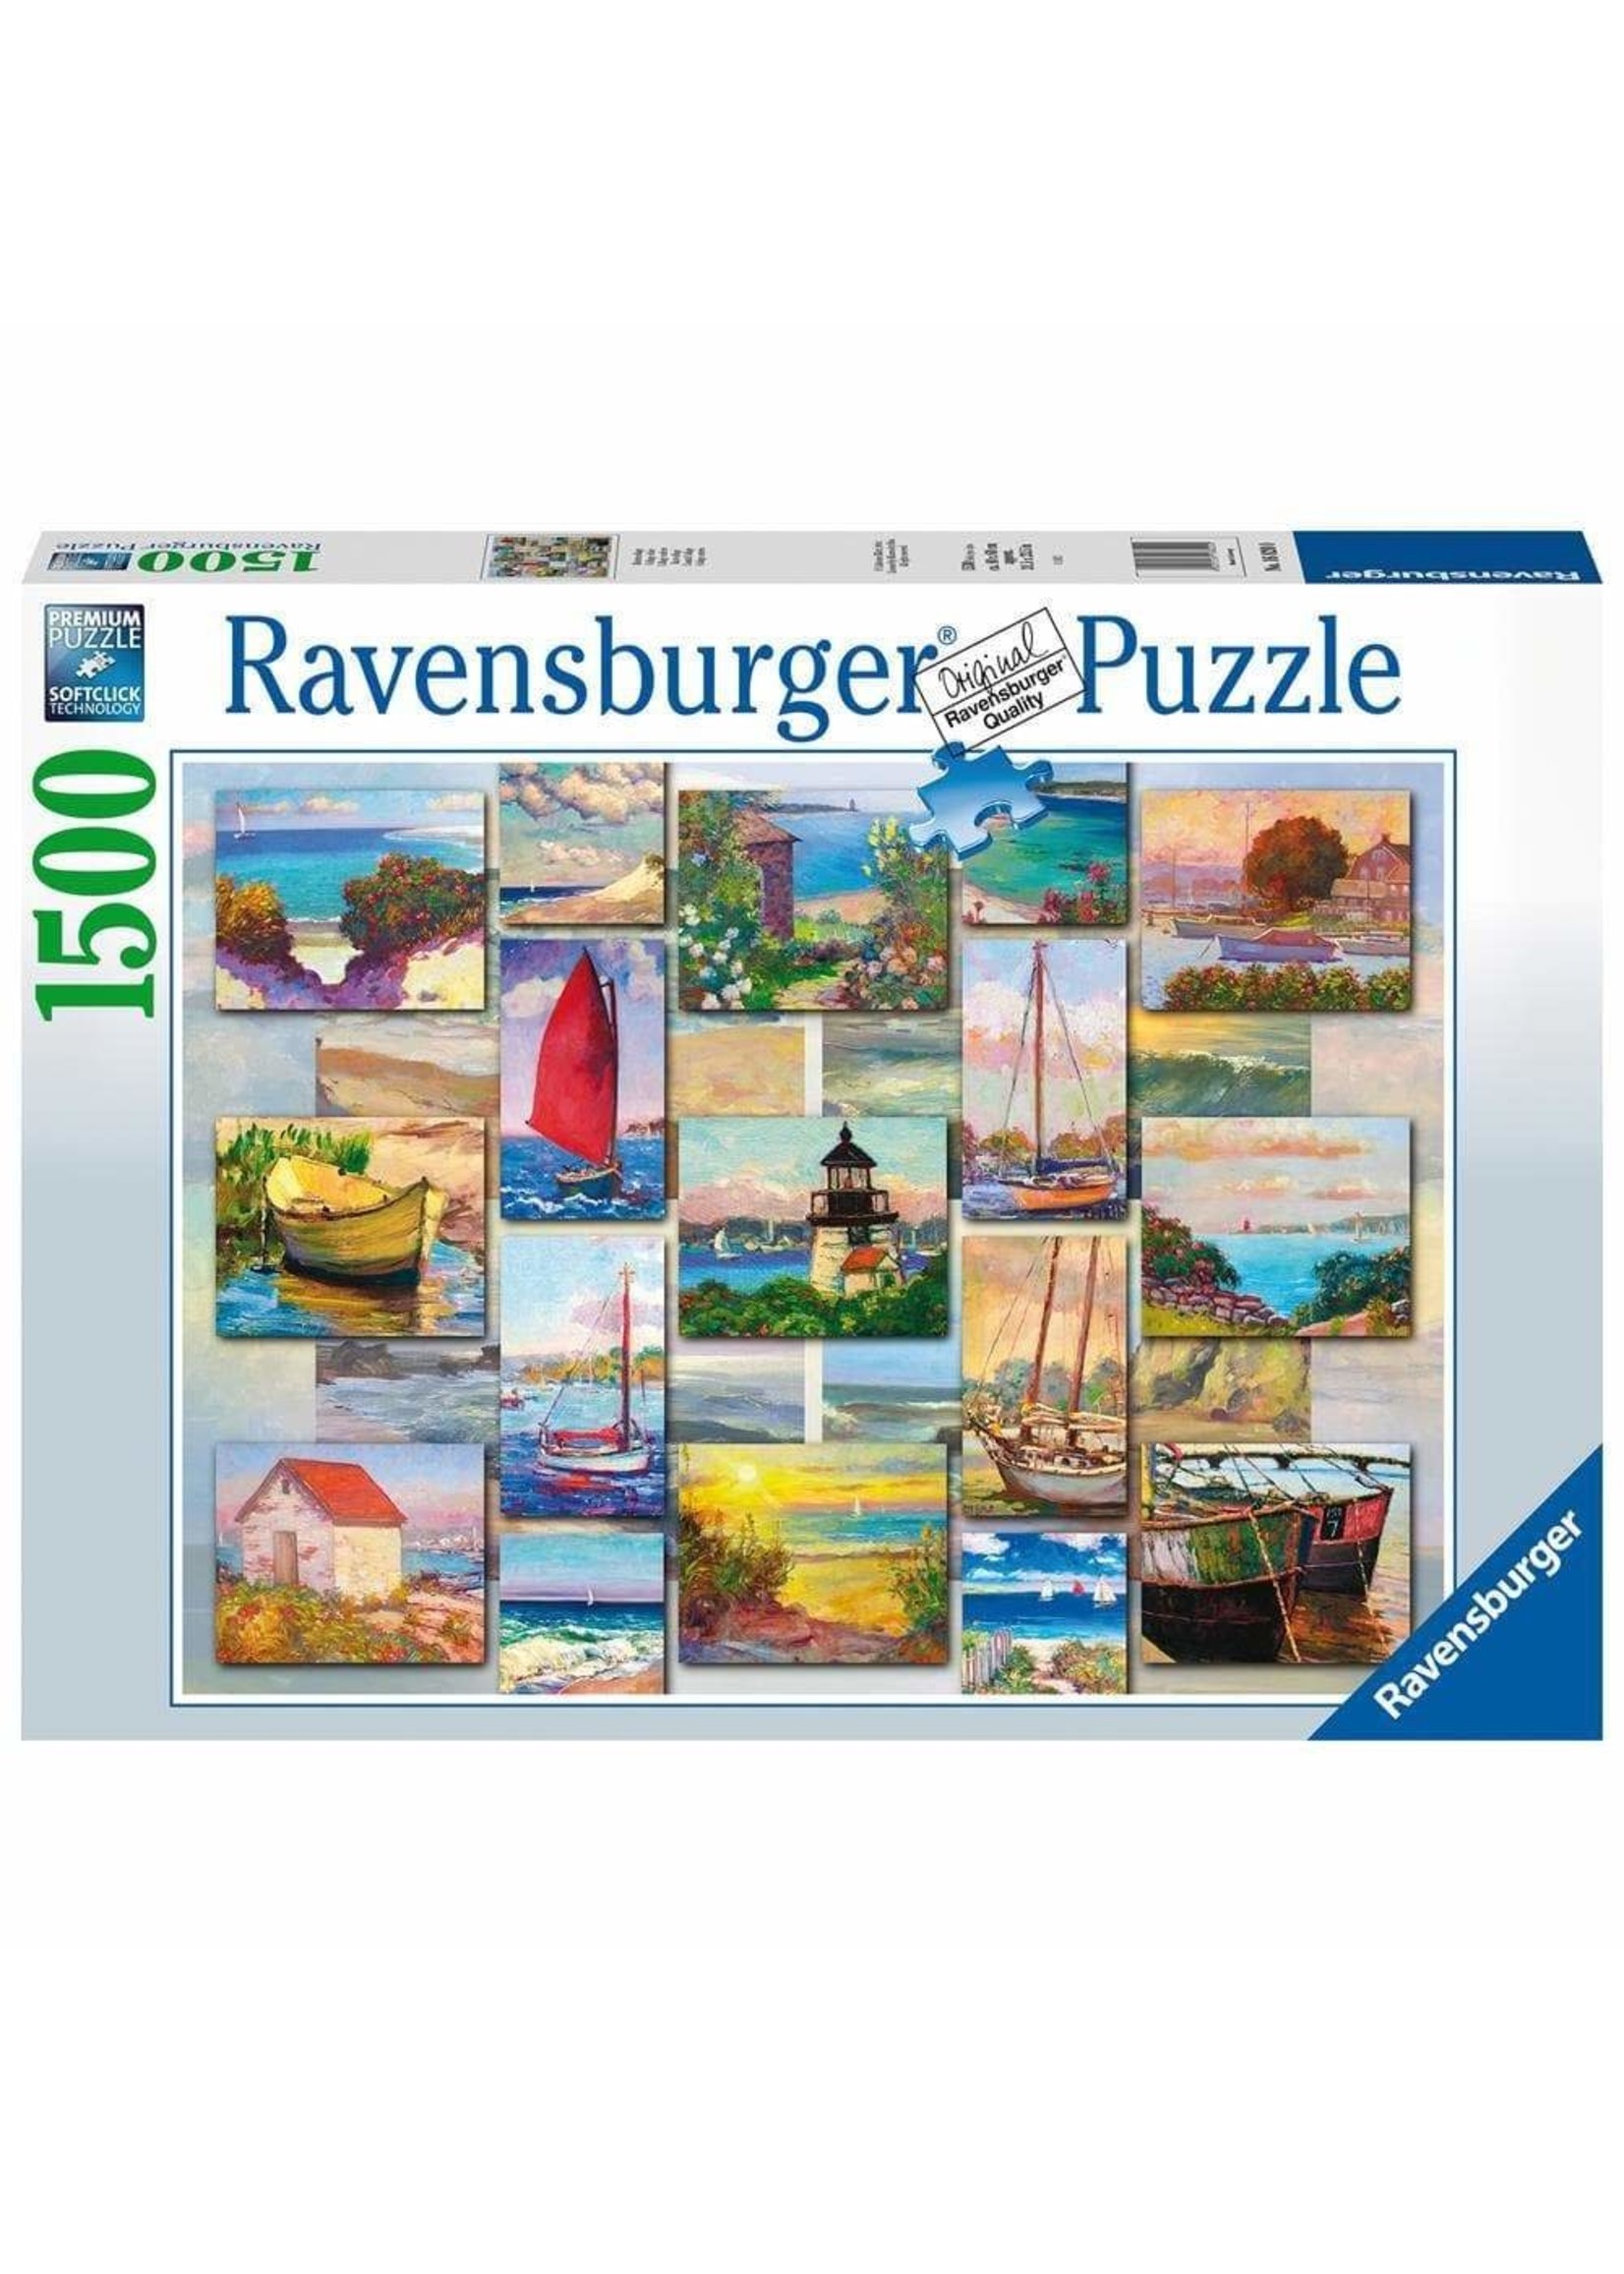 Ravensburger Puzzle Ravensburger 1500 pcs Coastal collage